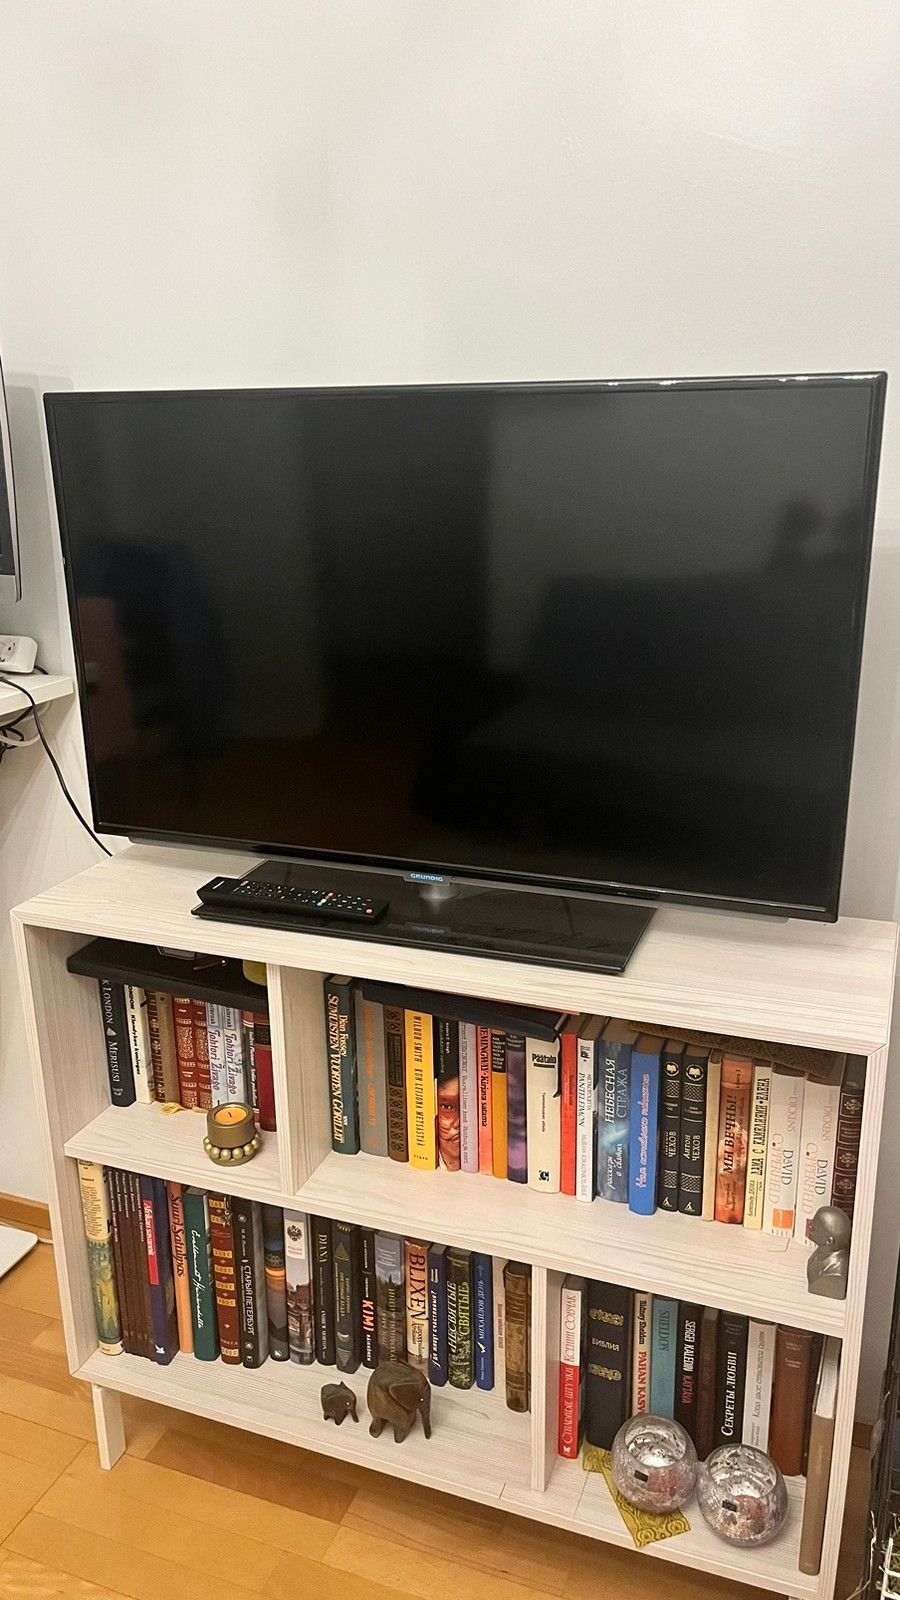 Grundig smart TV. 92 x 53 cm.